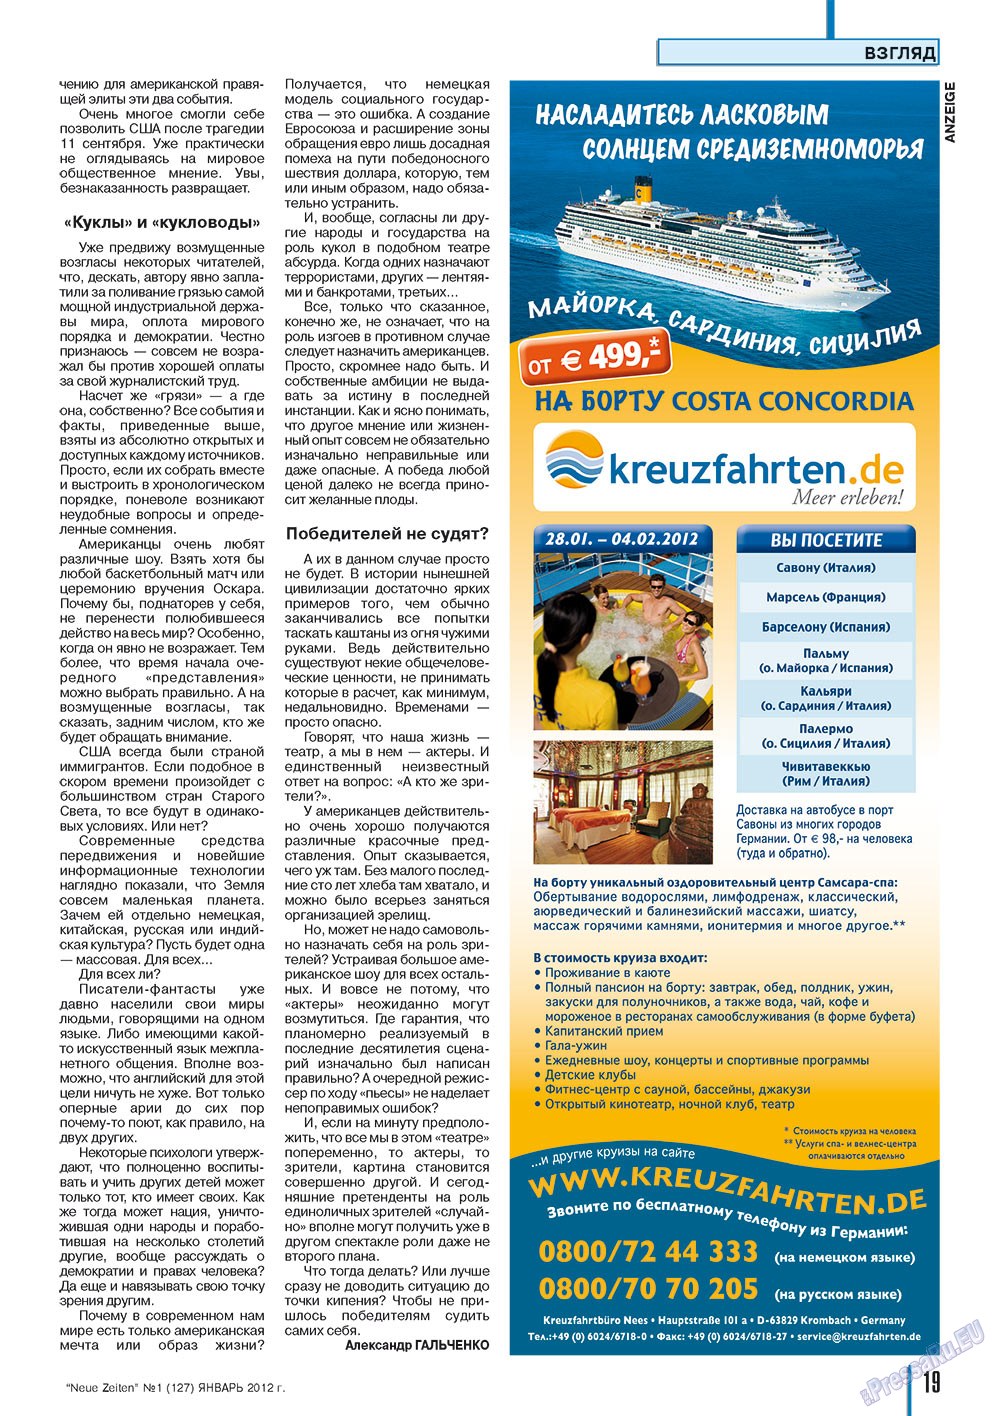 Neue Zeiten (журнал). 2012 год, номер 1, стр. 19